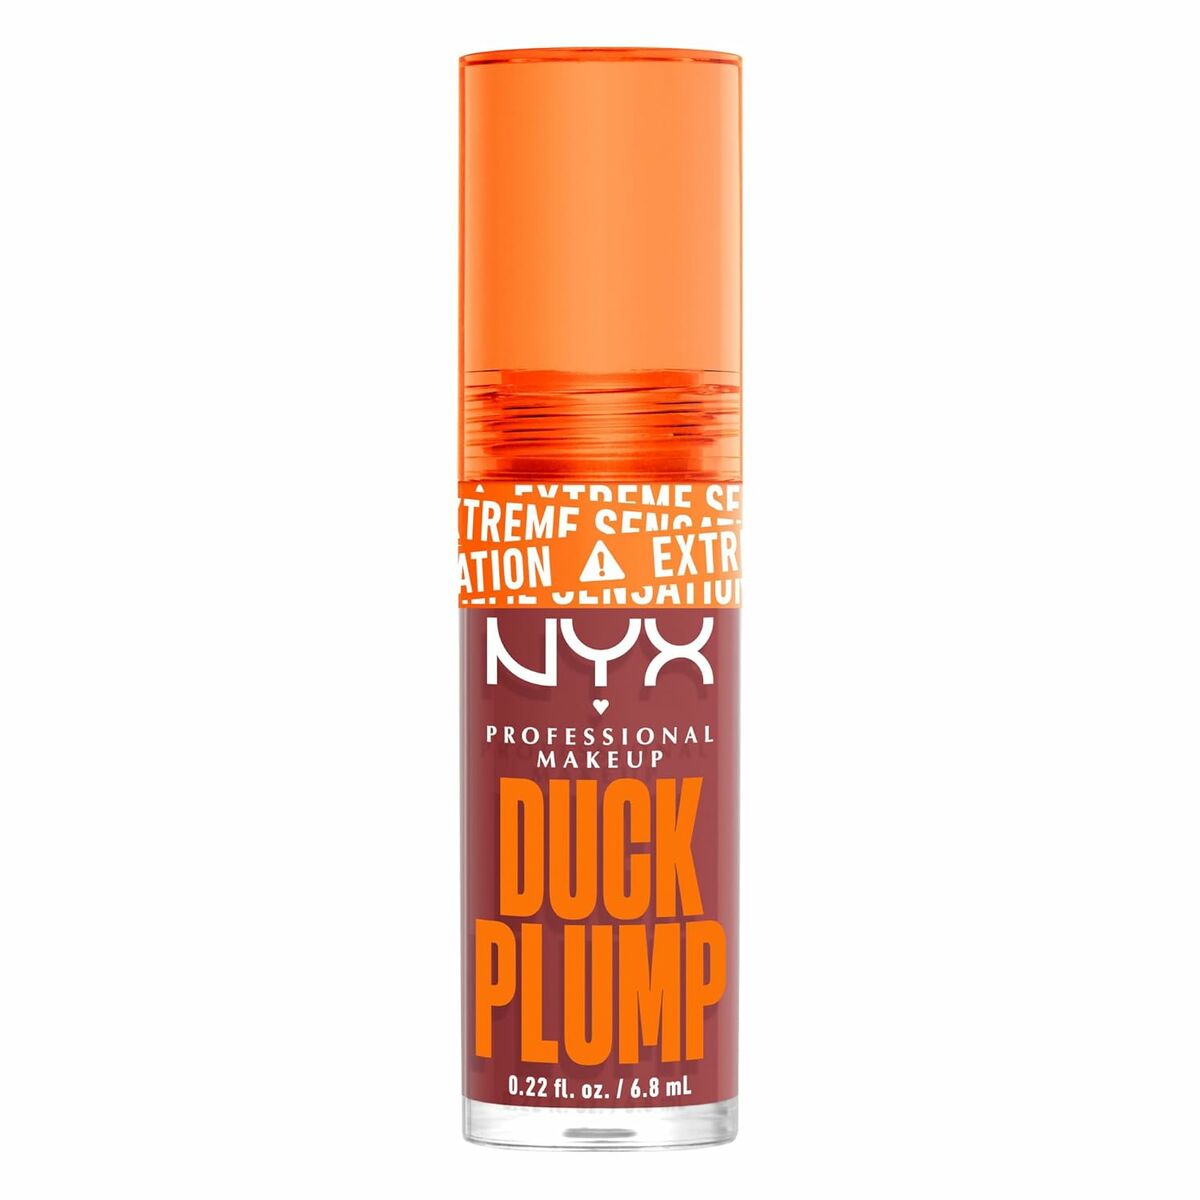 Lippgloss NYX Duck Plump Mauve out of my way 6,8 ml - CA International 